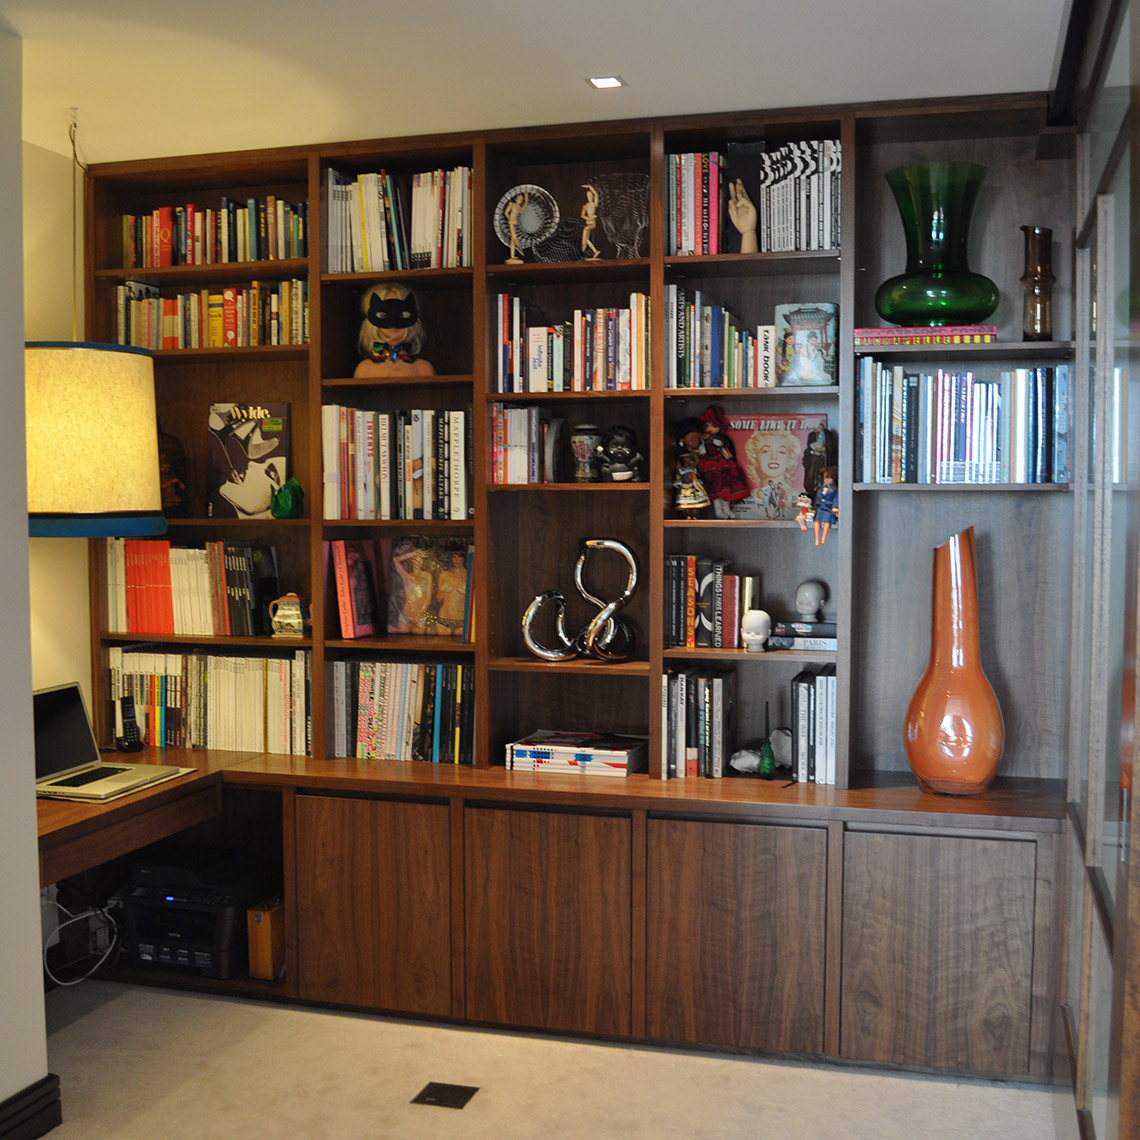 Bookshelf configuration